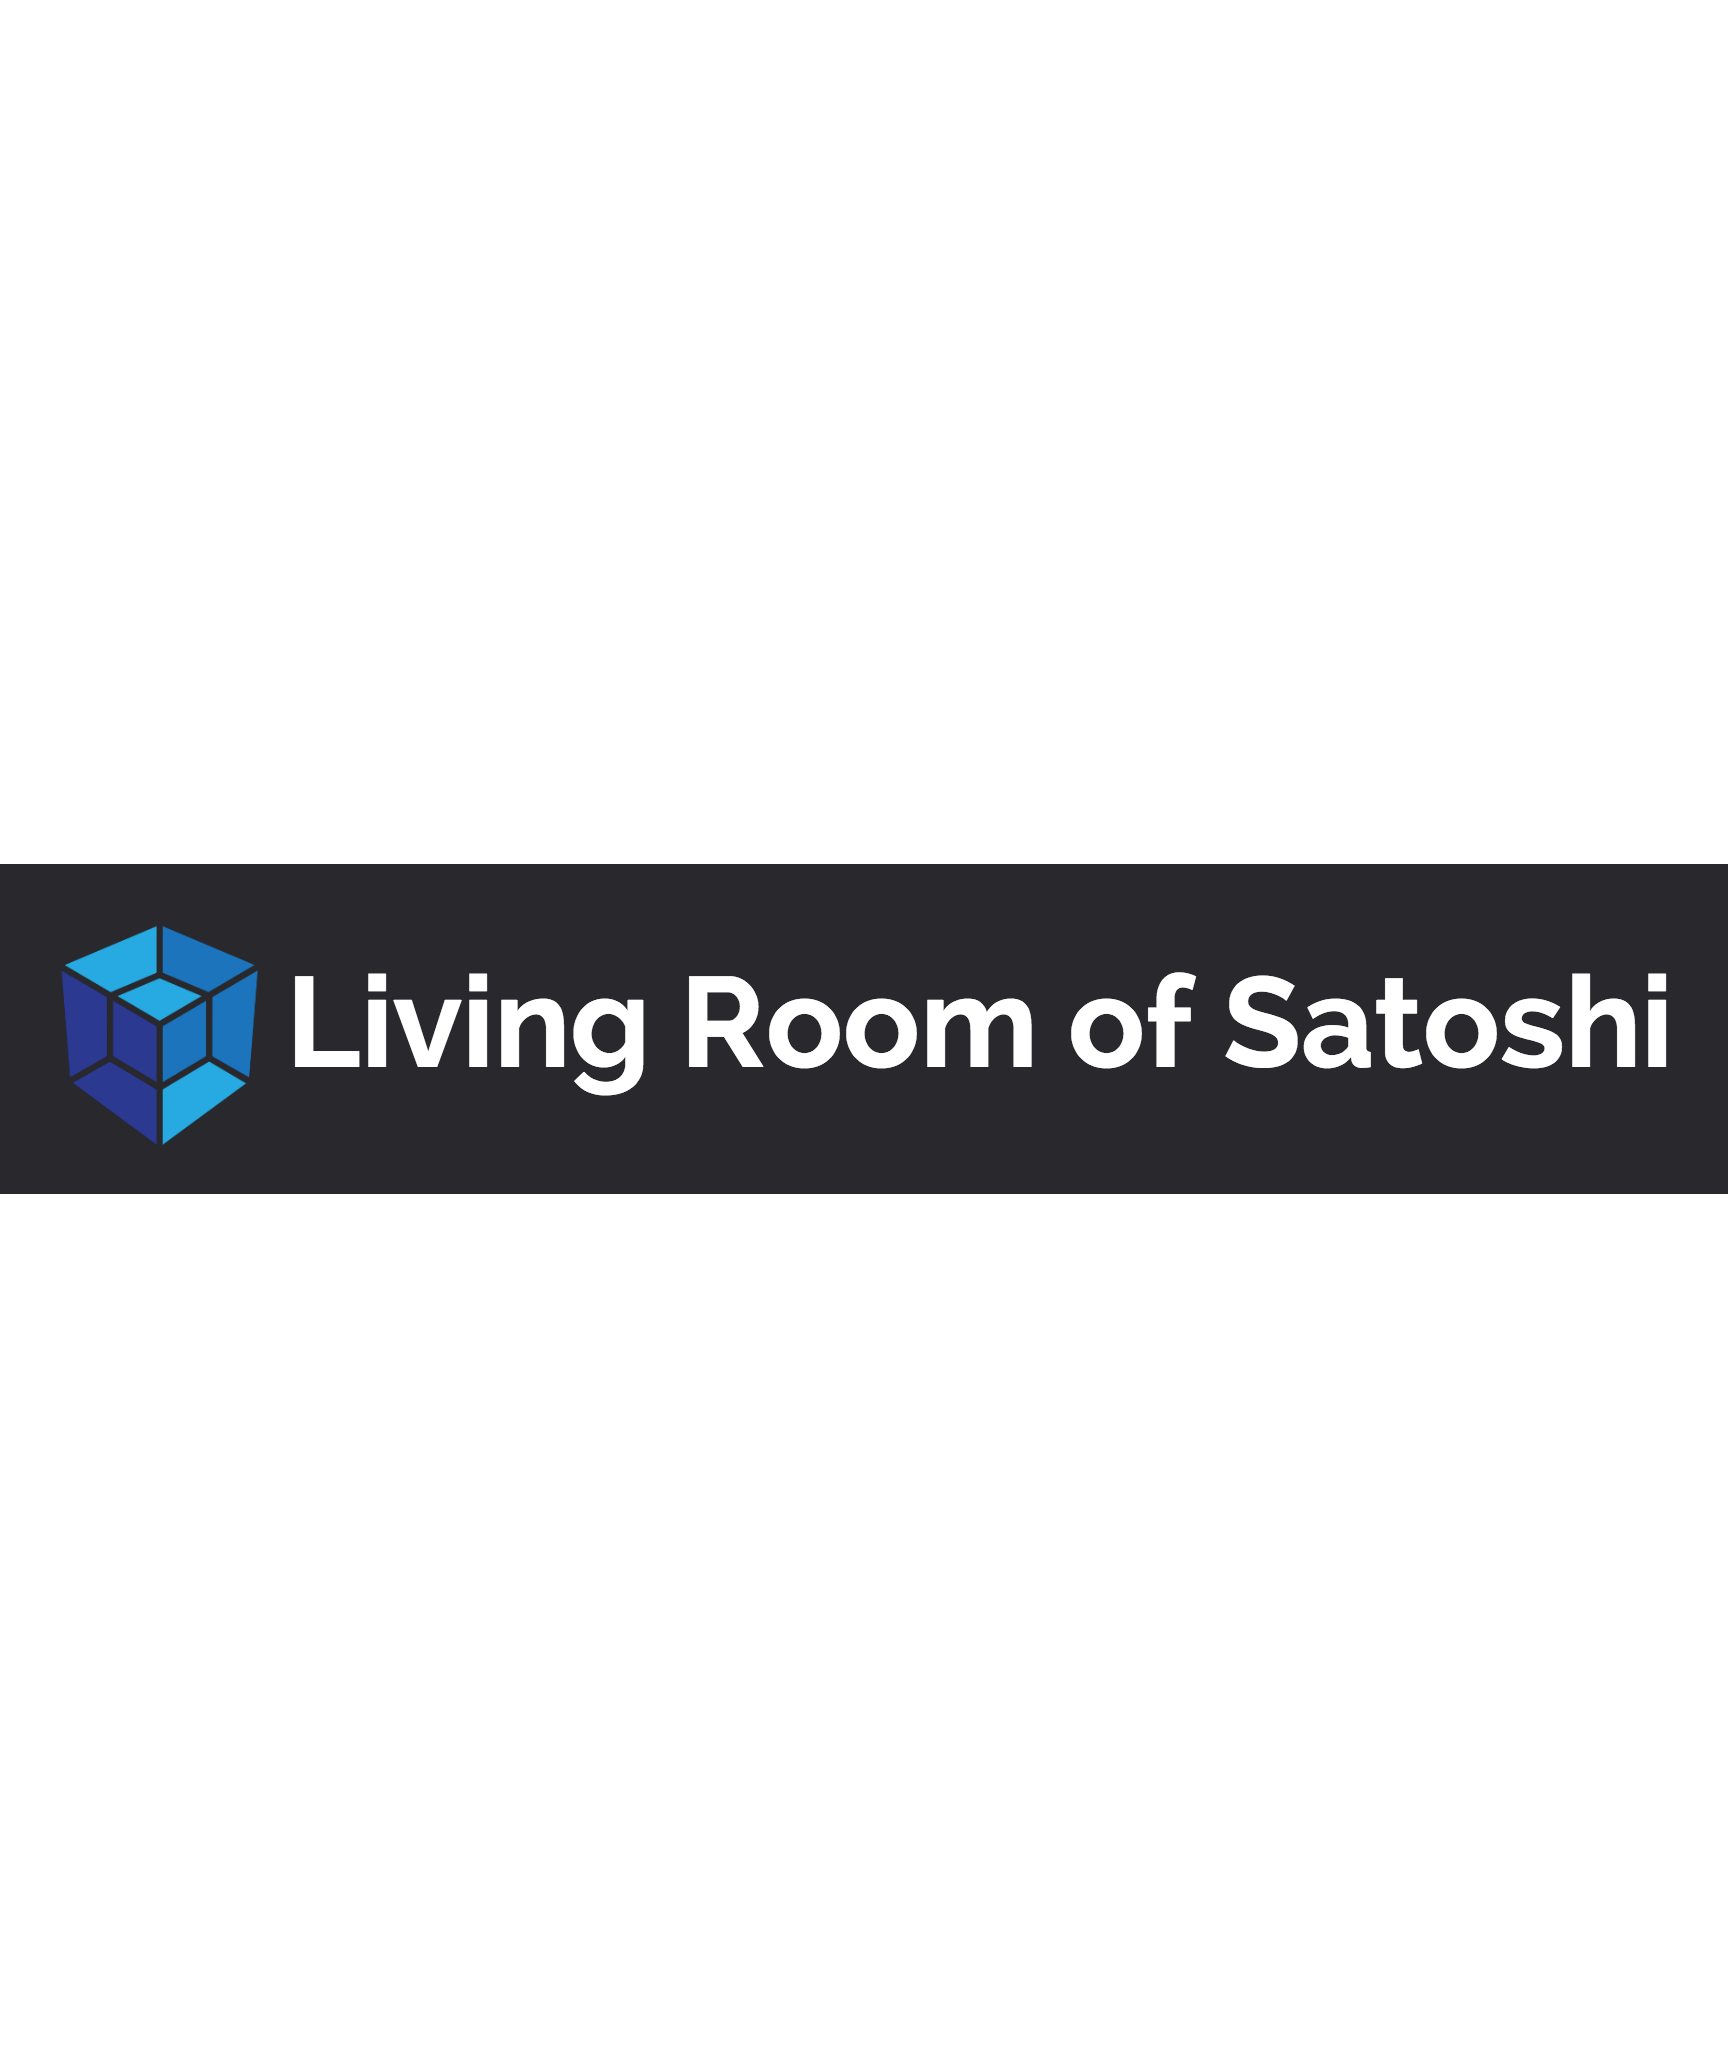 Living Room of Satoshi launches rewards program